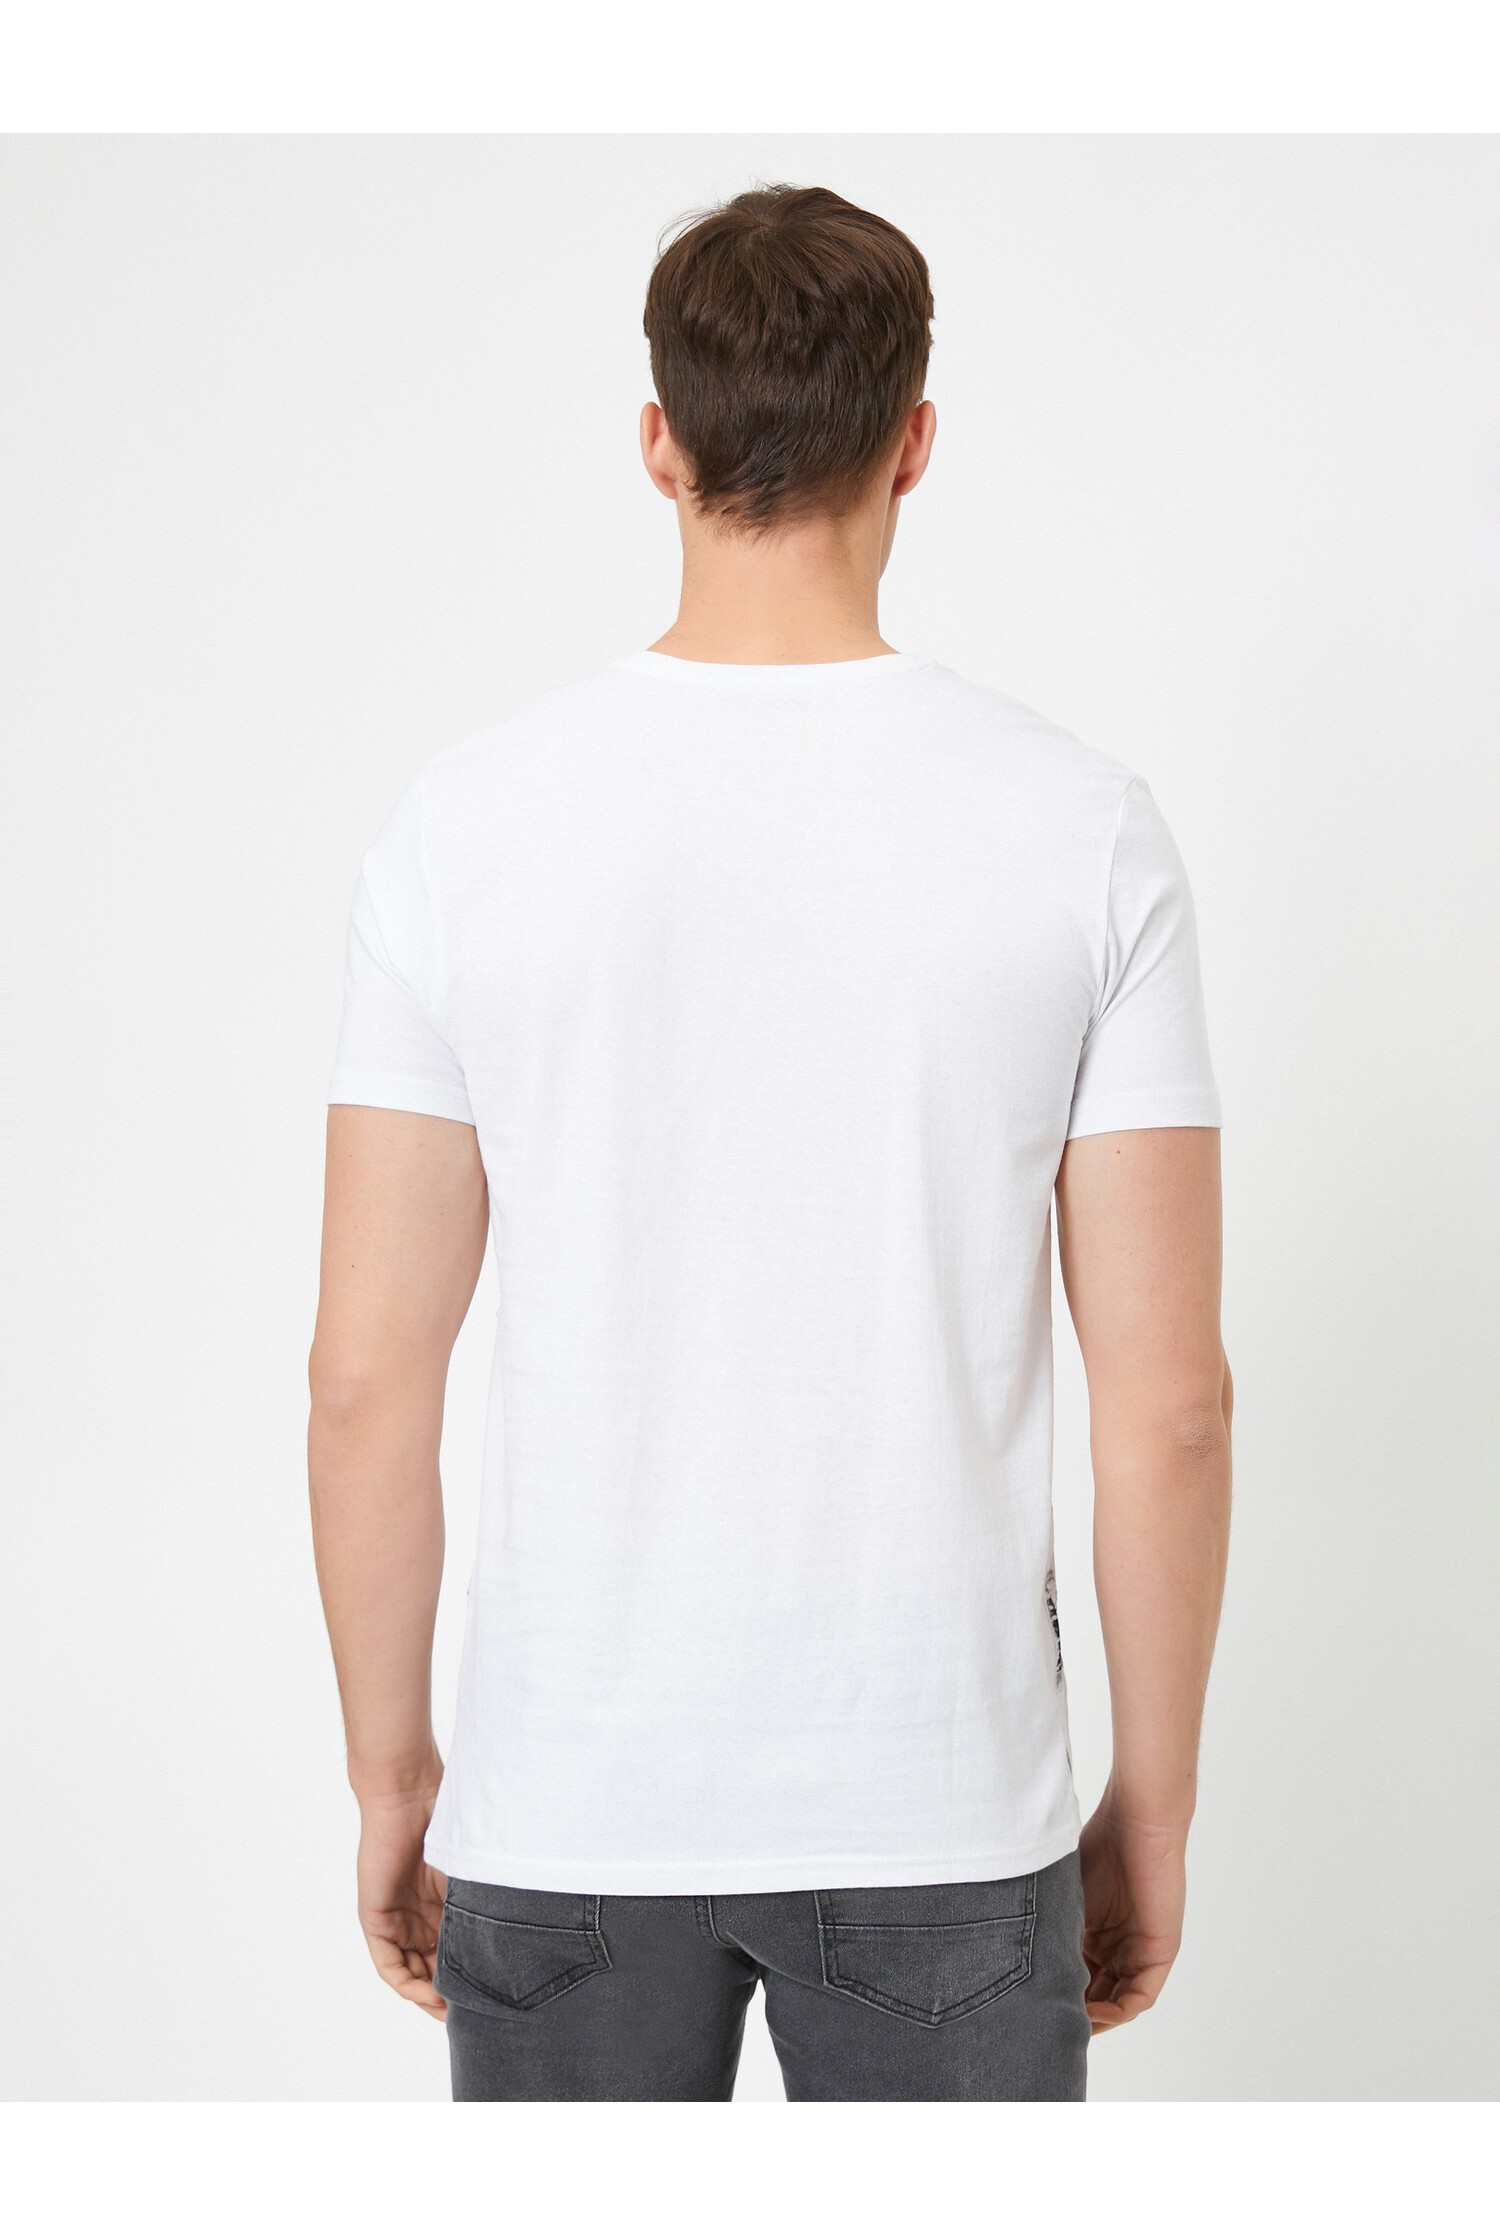 white men's T-shirt